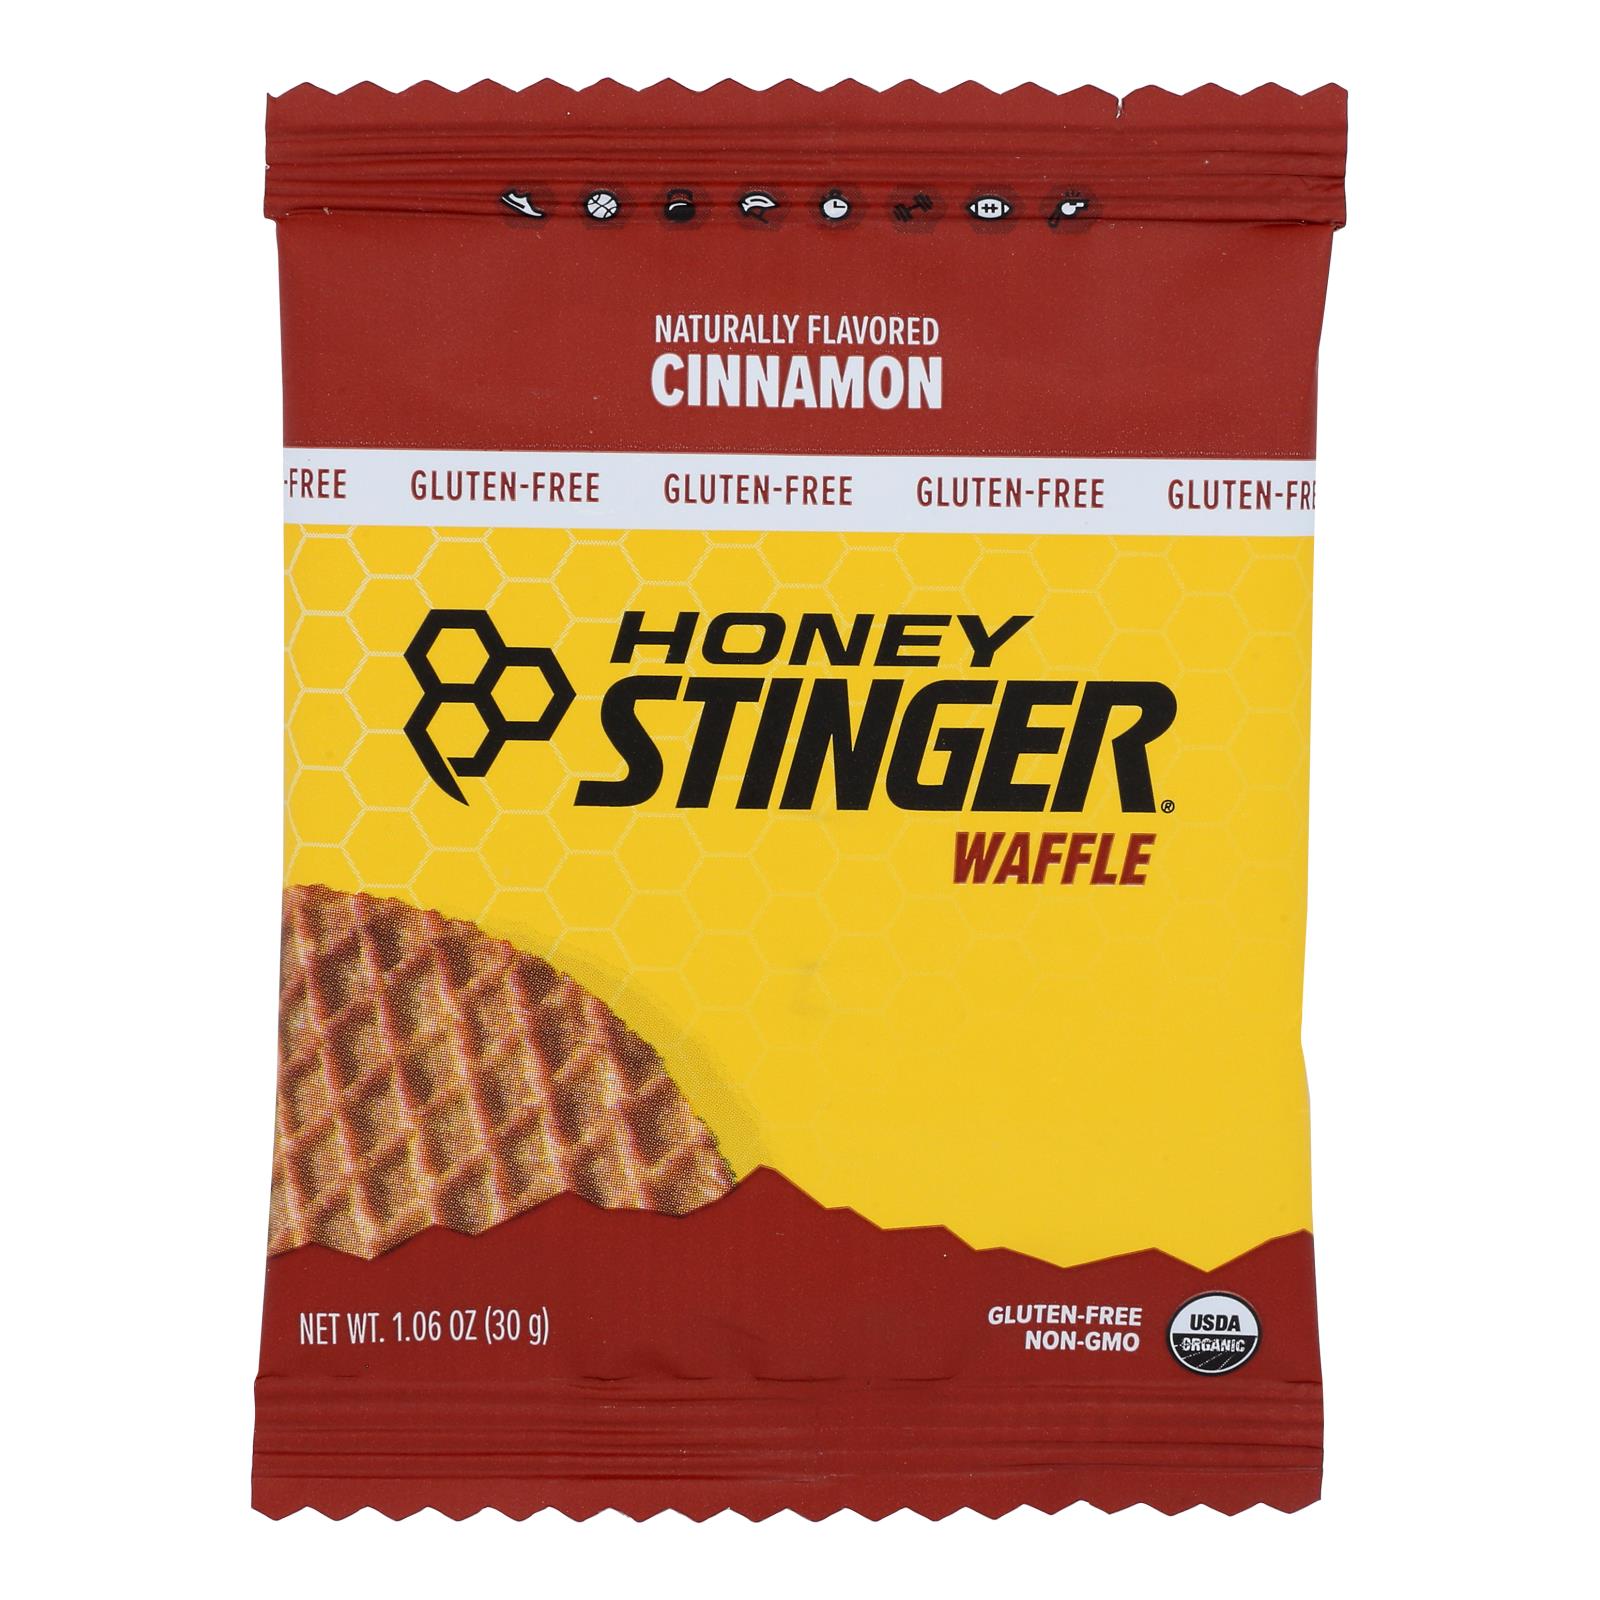 Honey Stinger Organic Gluten-Free Cinnamon Waffle, 1.06 oz (Pack of 12)